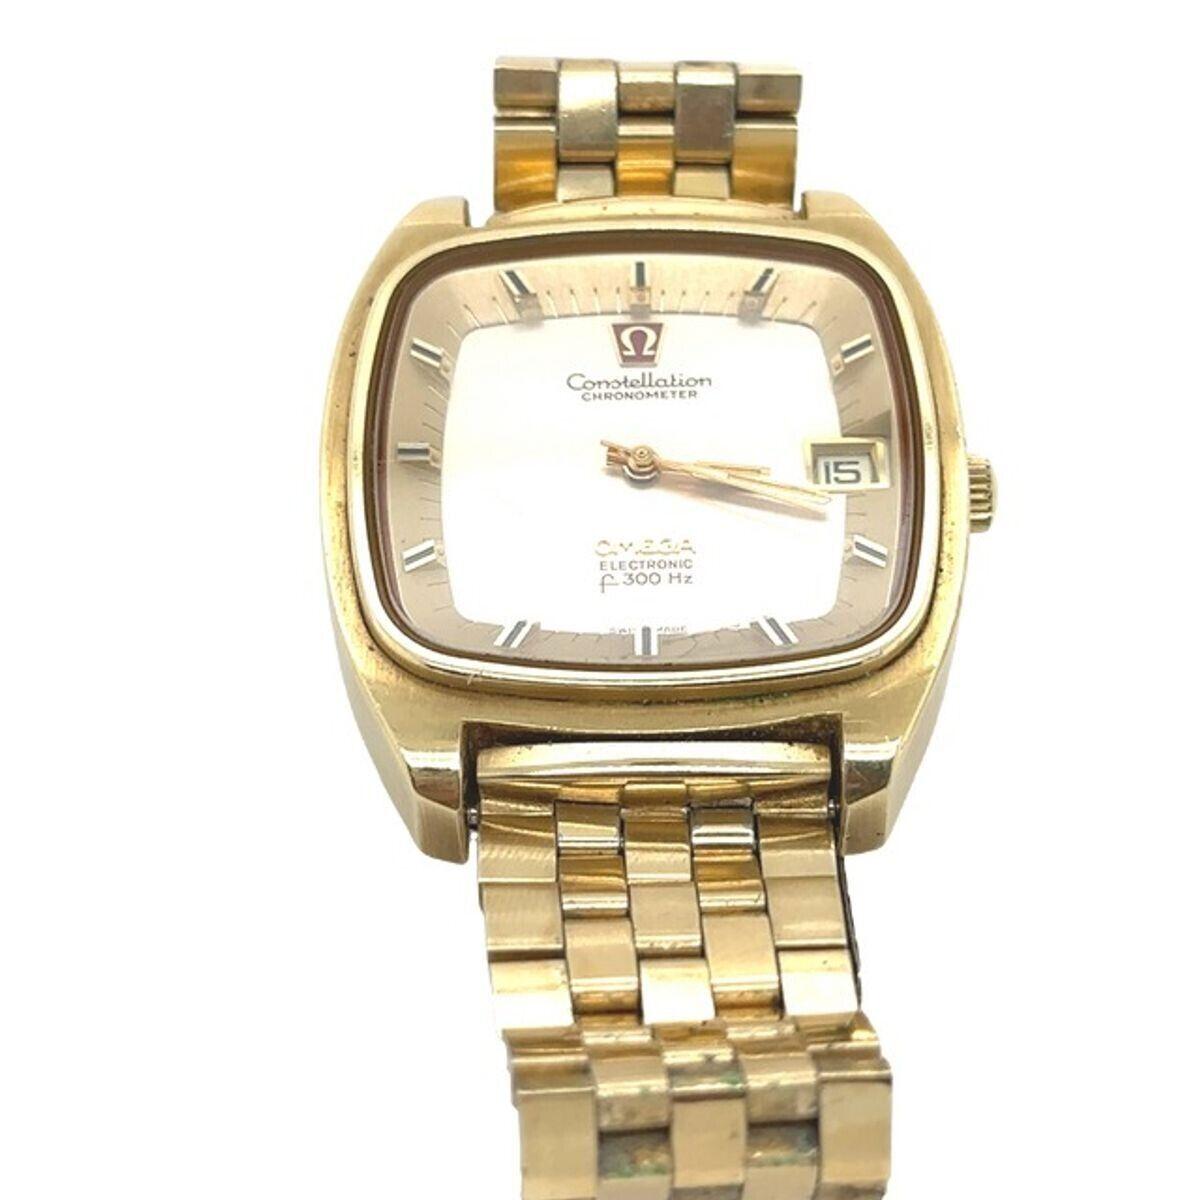 Vintage Omega F300HZ Constellation Chronometer Watch 1